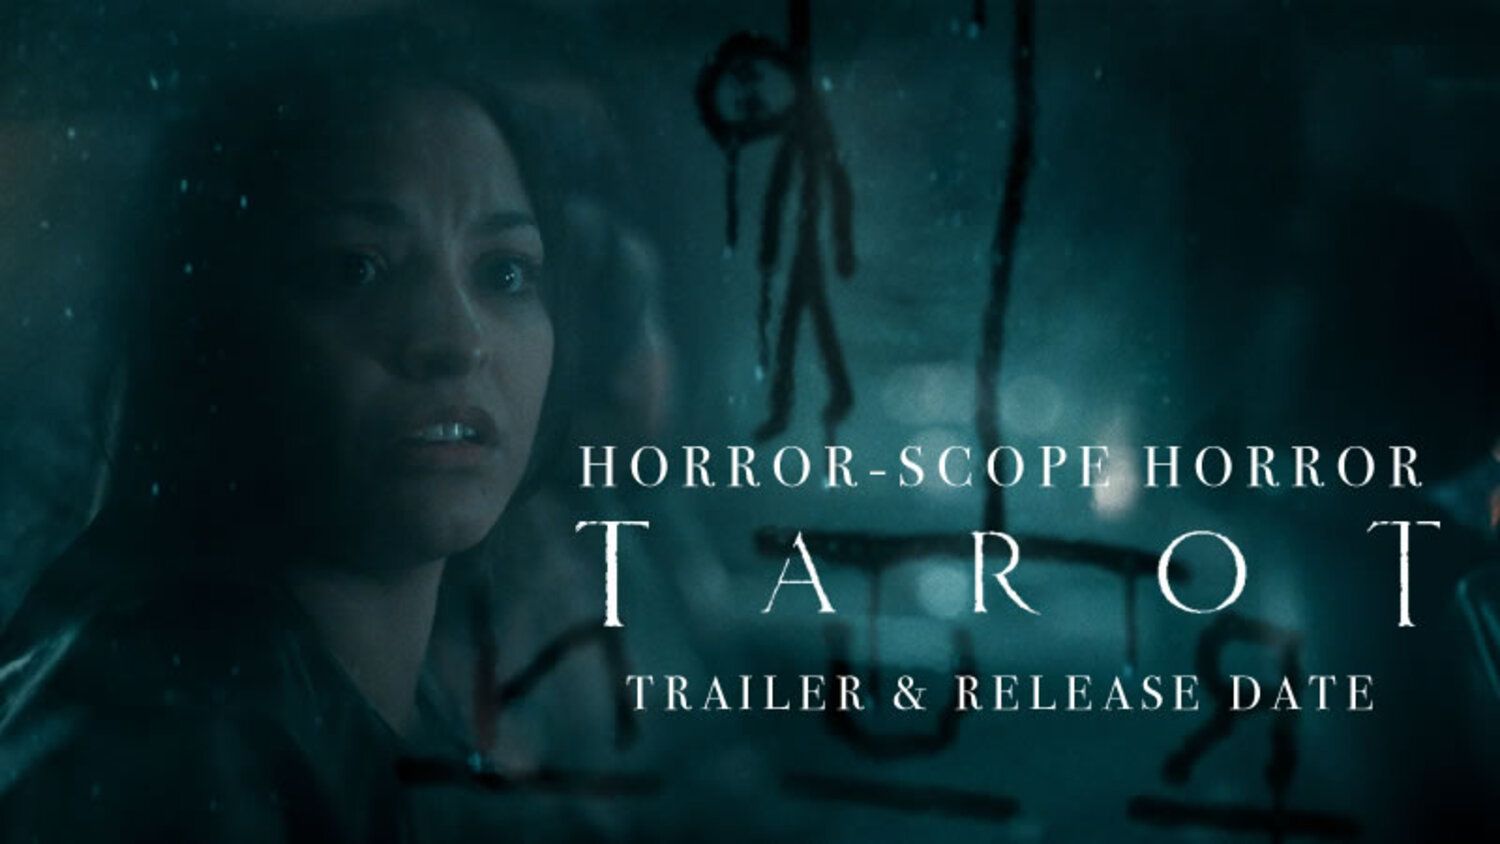 'Tarot' Kisah Menegangkan Tujuh Sahabat di Balik Kartu Misterius, Film Horror Asal Amerika Serikat